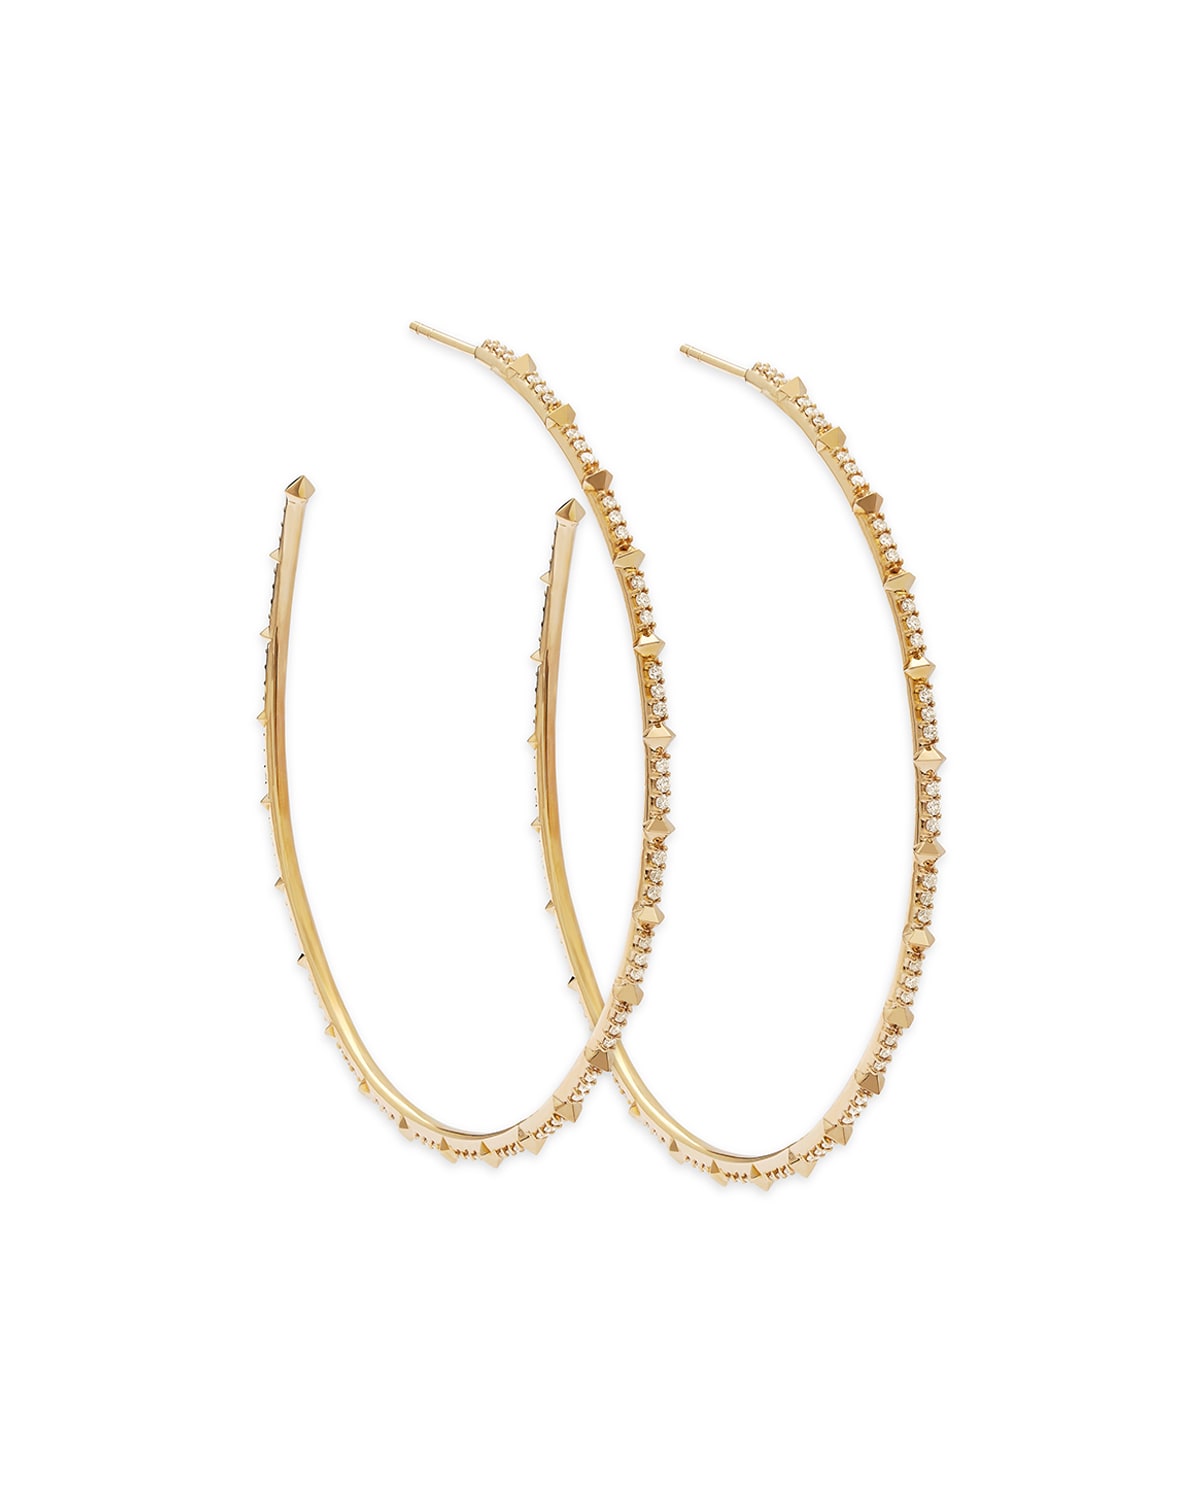 Paradise Jewelers 14K White Gold 1.5mm Diamond Cut Hoop Earrings